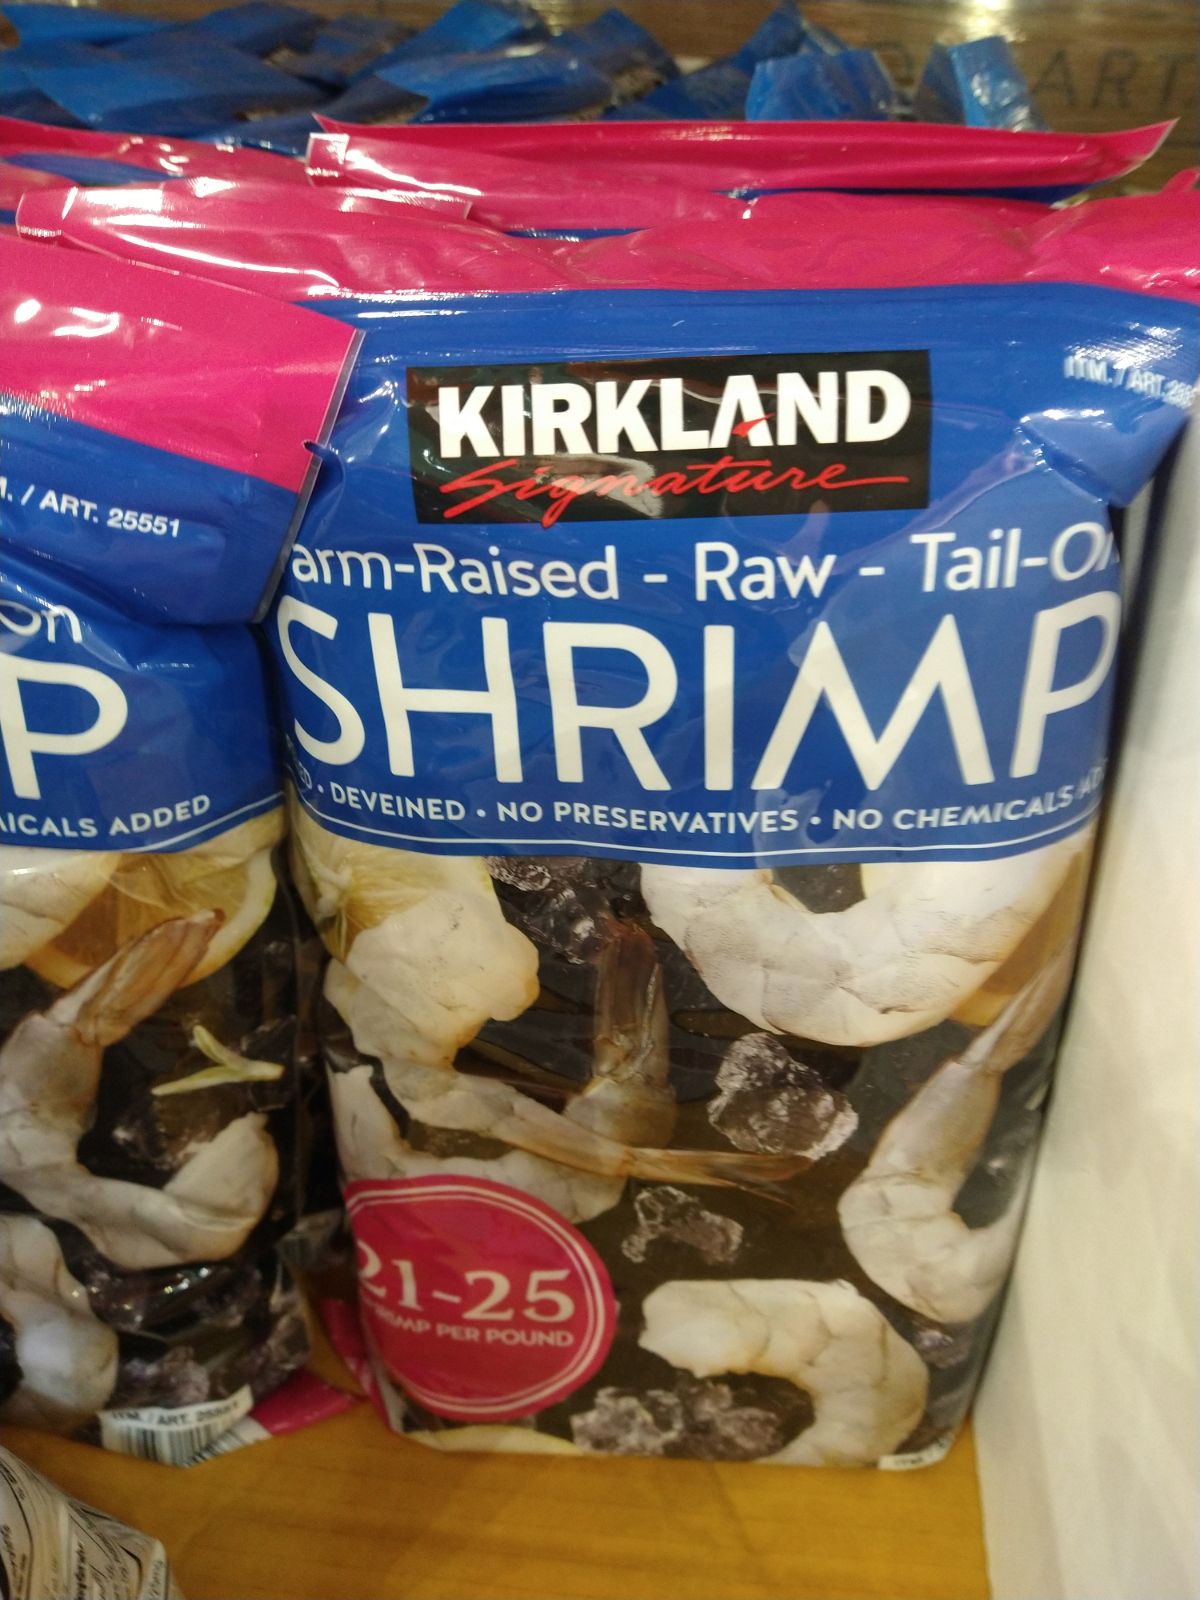 A close up a of blue bag of Kirkland Farm-Raised Raw Tail-On shrimp.